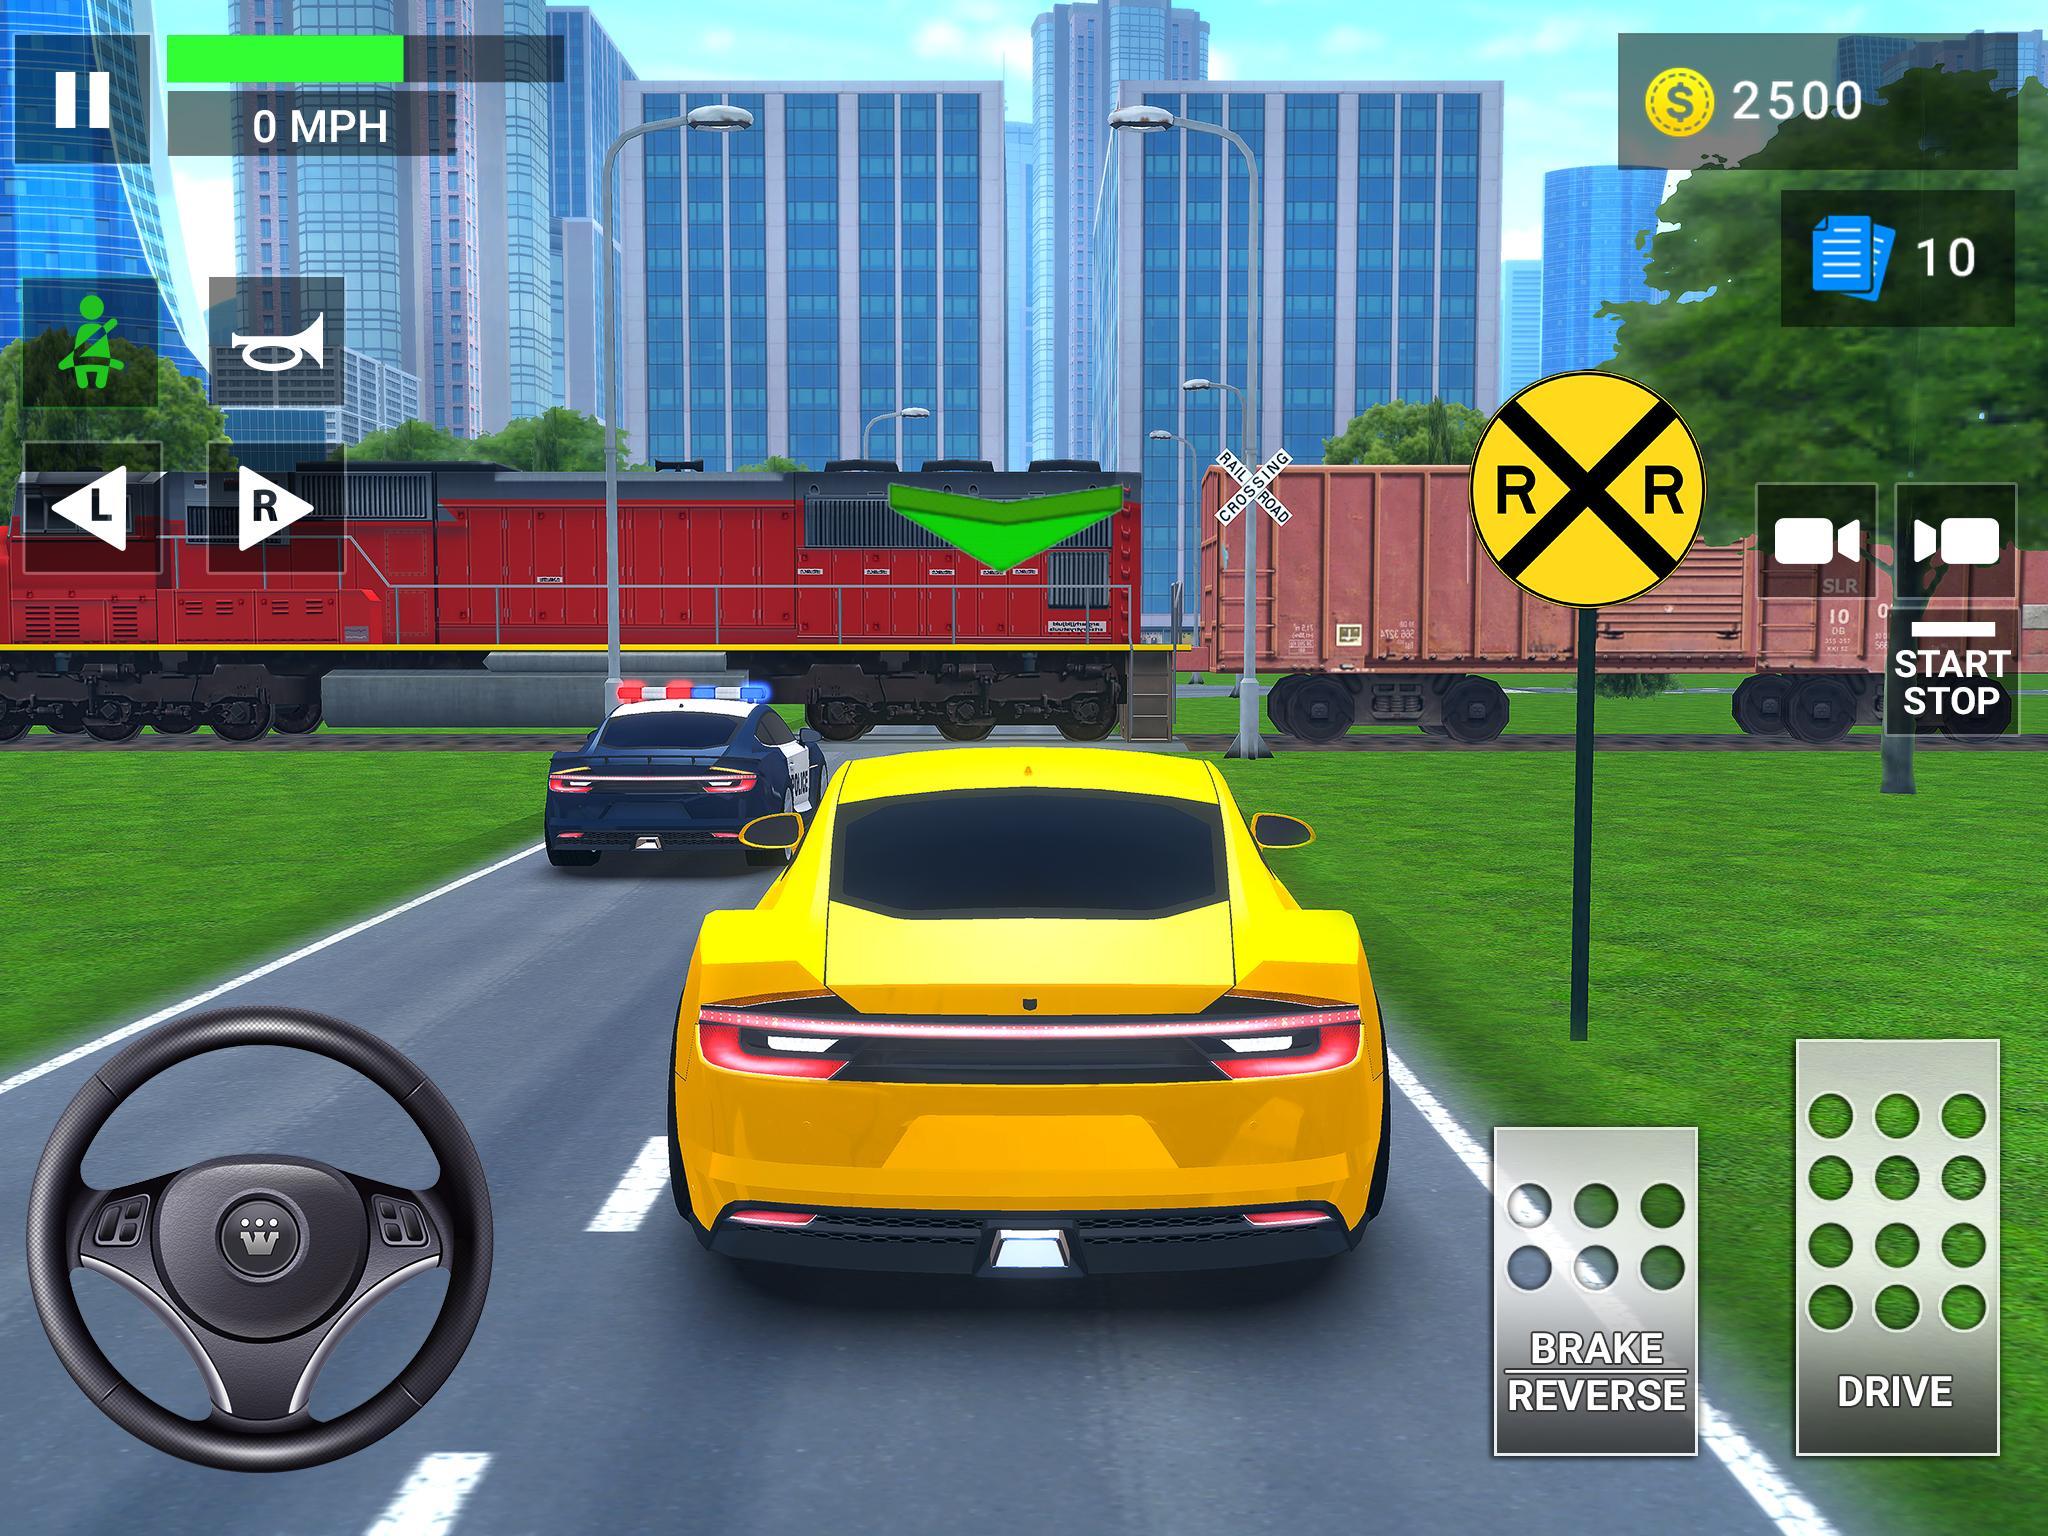 Driving Academy 2 Car Games & Driving School 2021 2.1 Screenshot 17